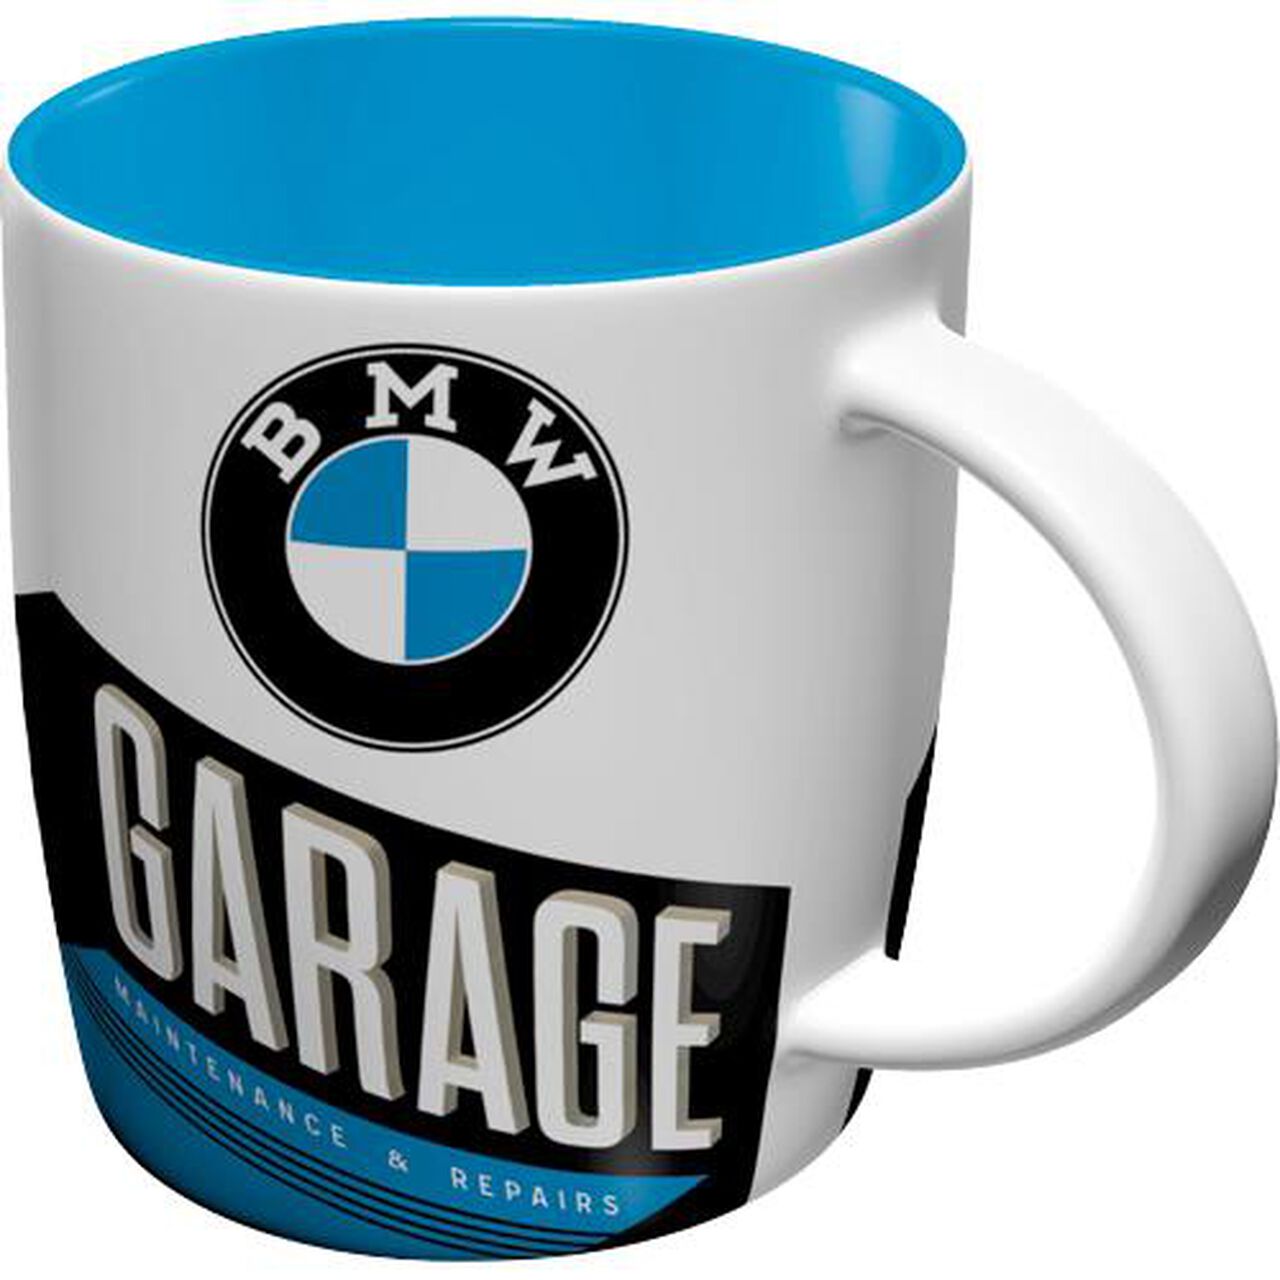 Classic BMW Jägermeiste 3.0 CSL illustration Coffee Mug – GarageProject101